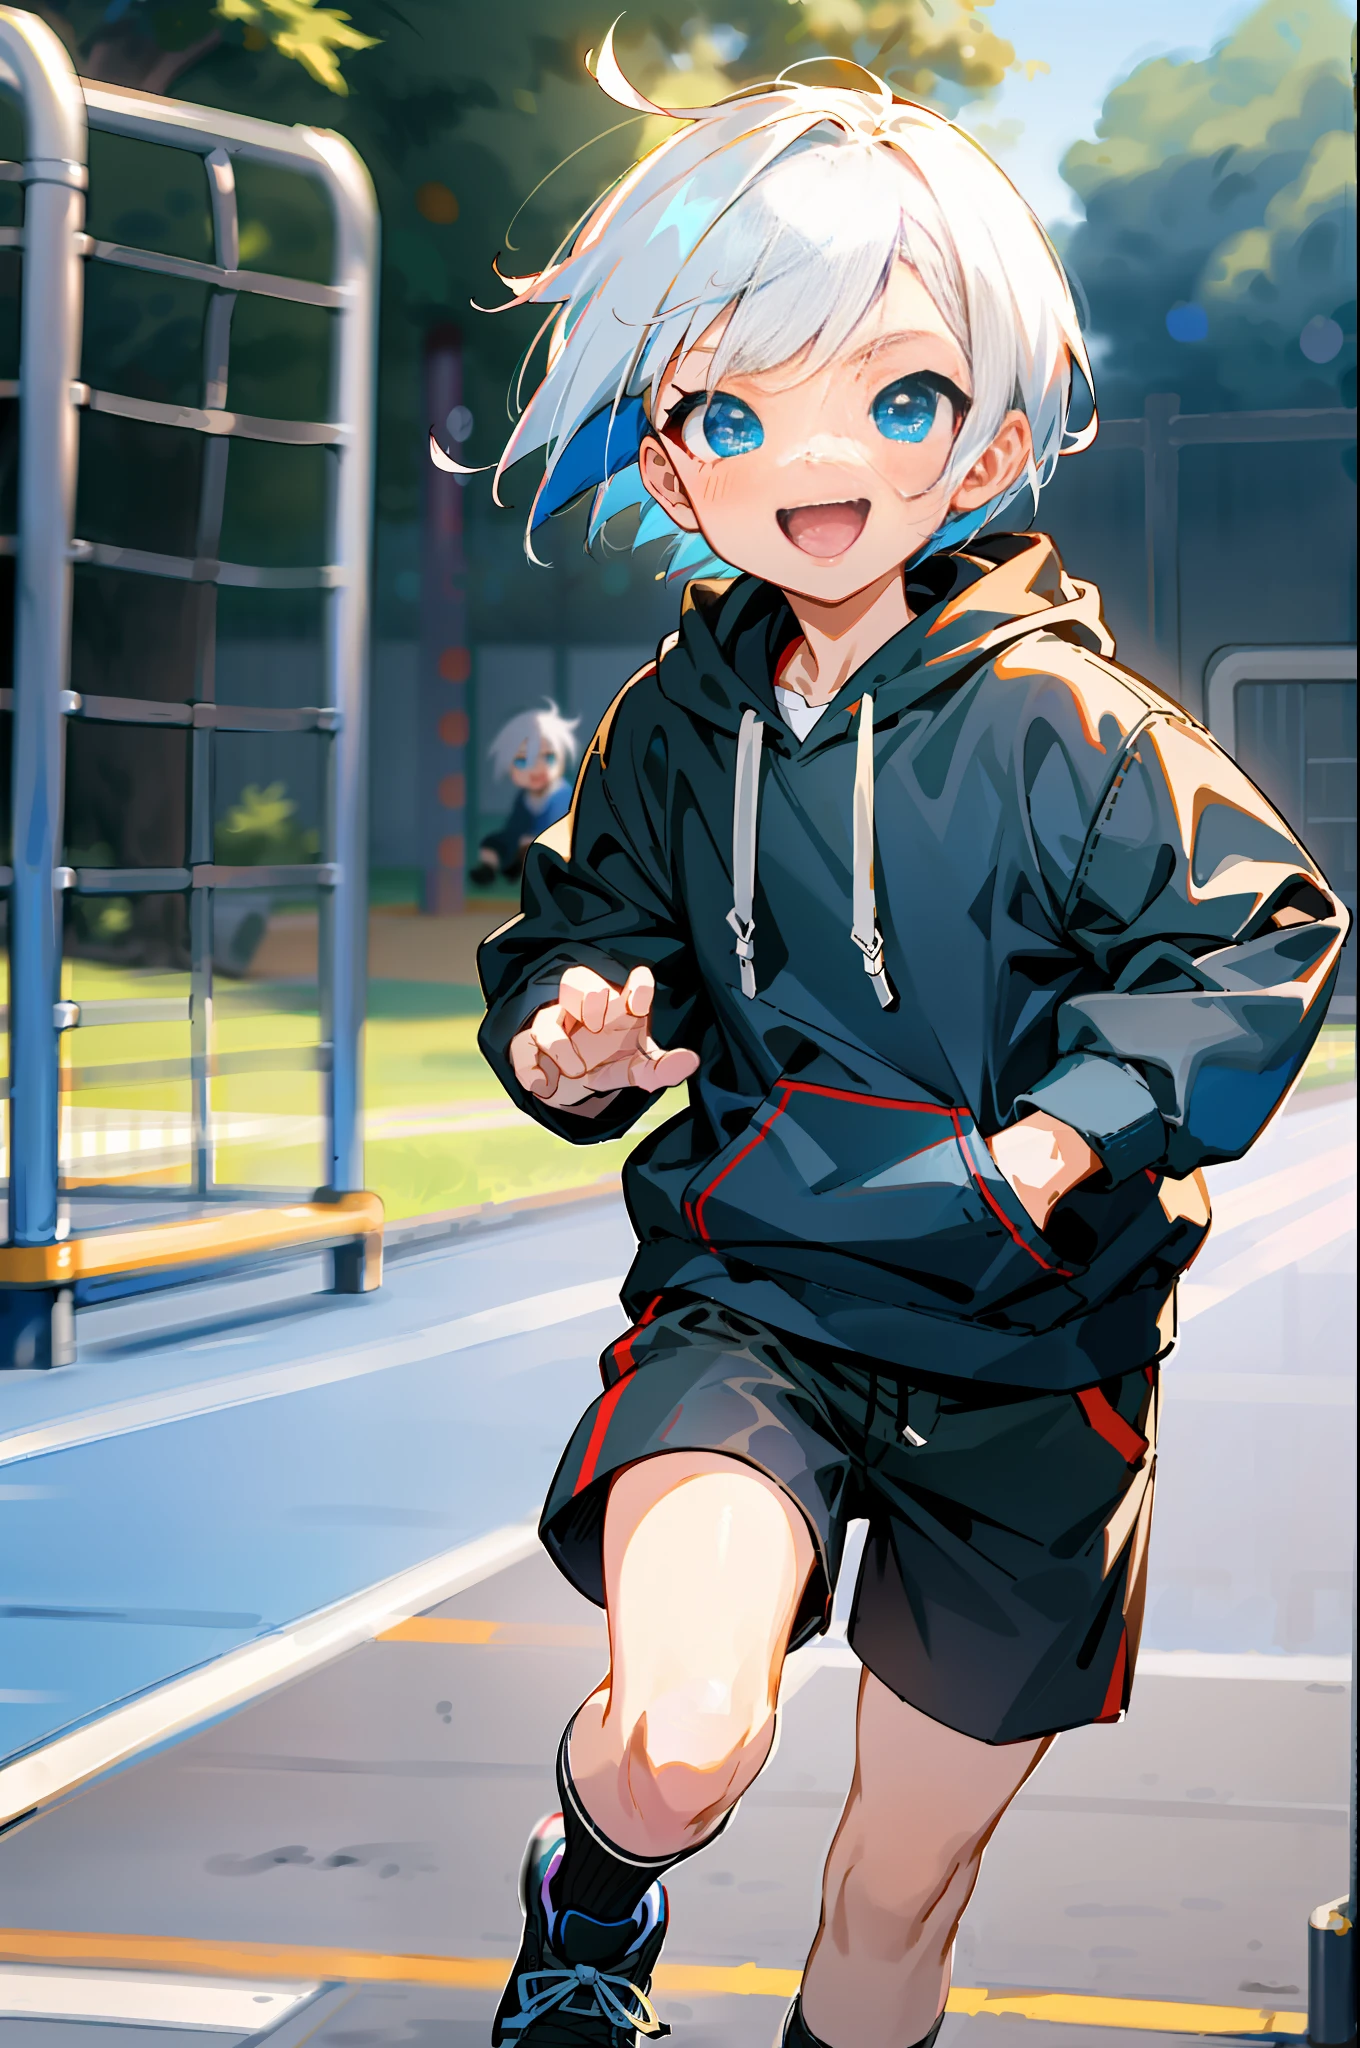 Anime boy running on a tennis court with a racket - SeaArt AI